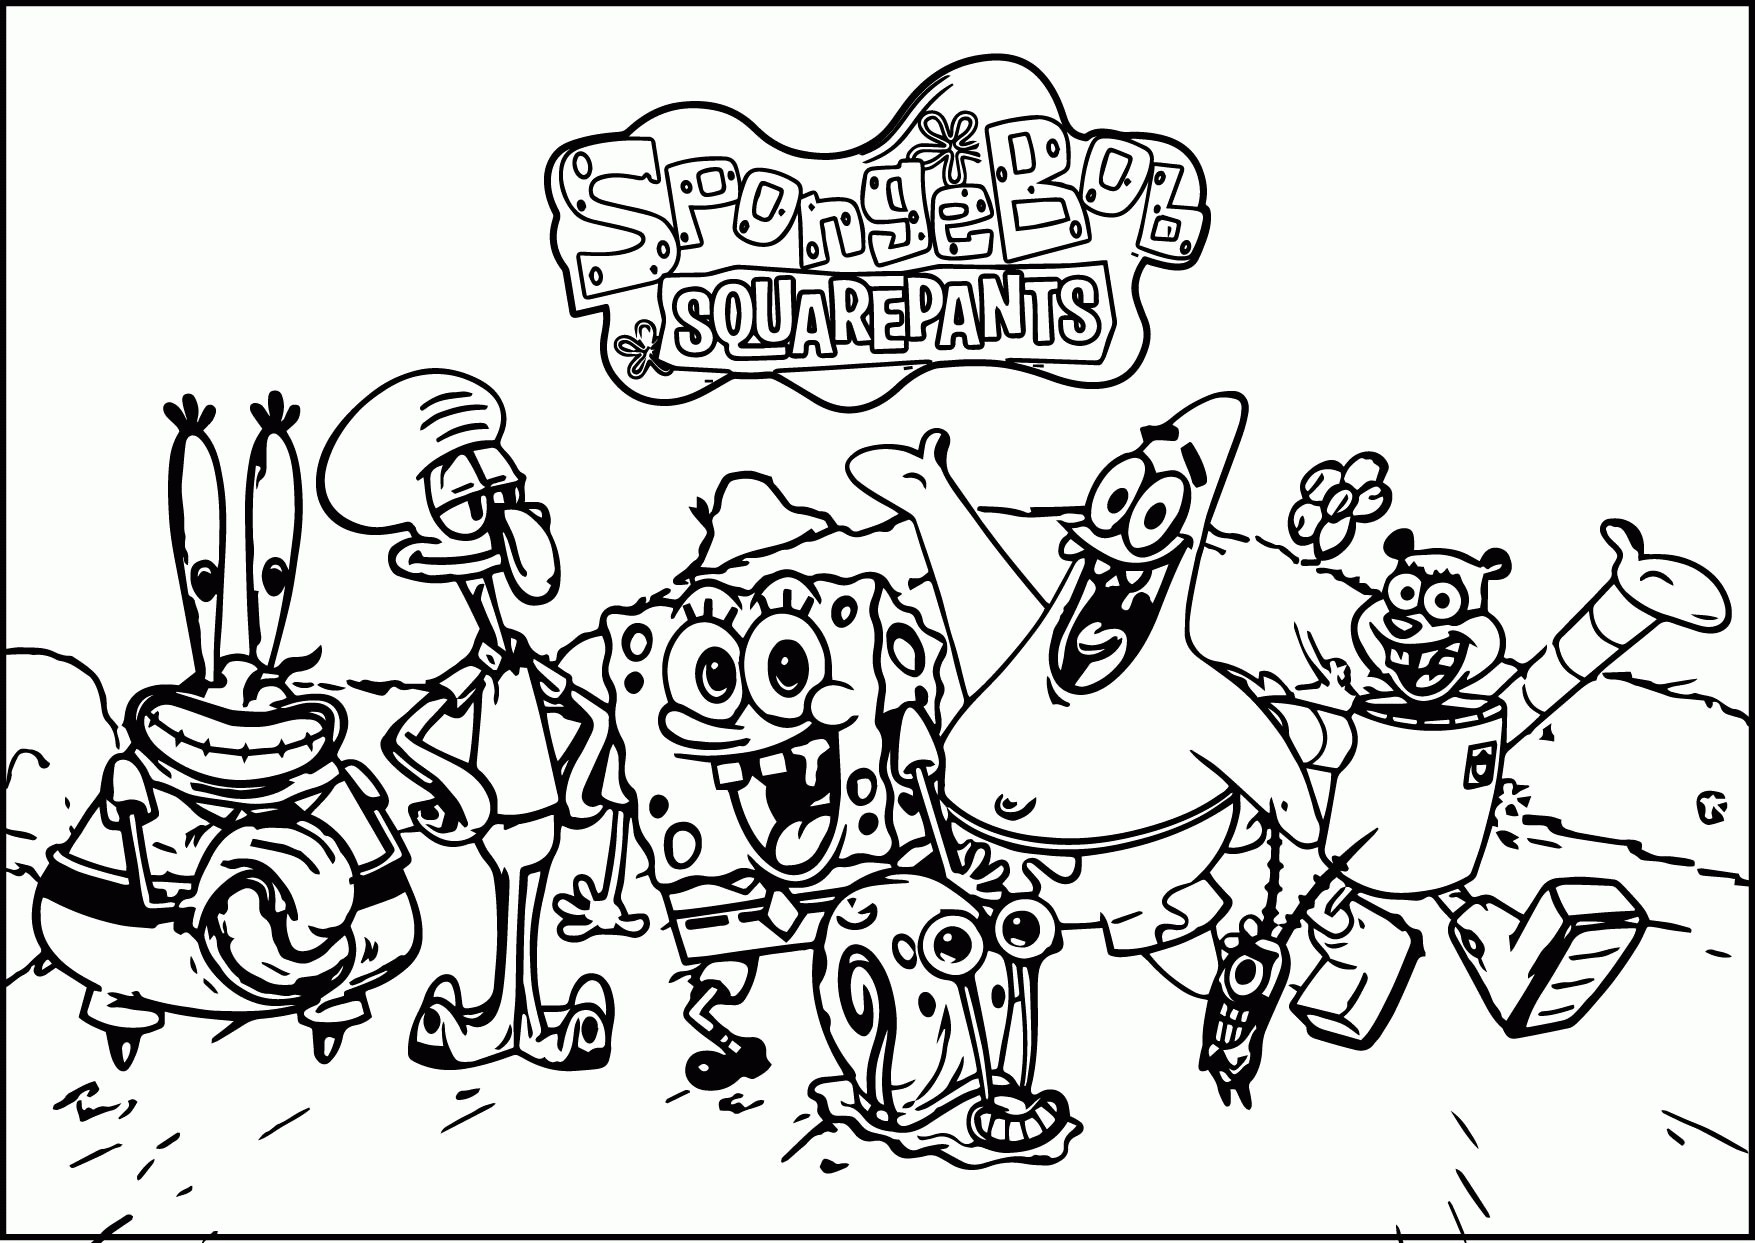 Spongebob Drawing Games at PaintingValley.com | Explore ...